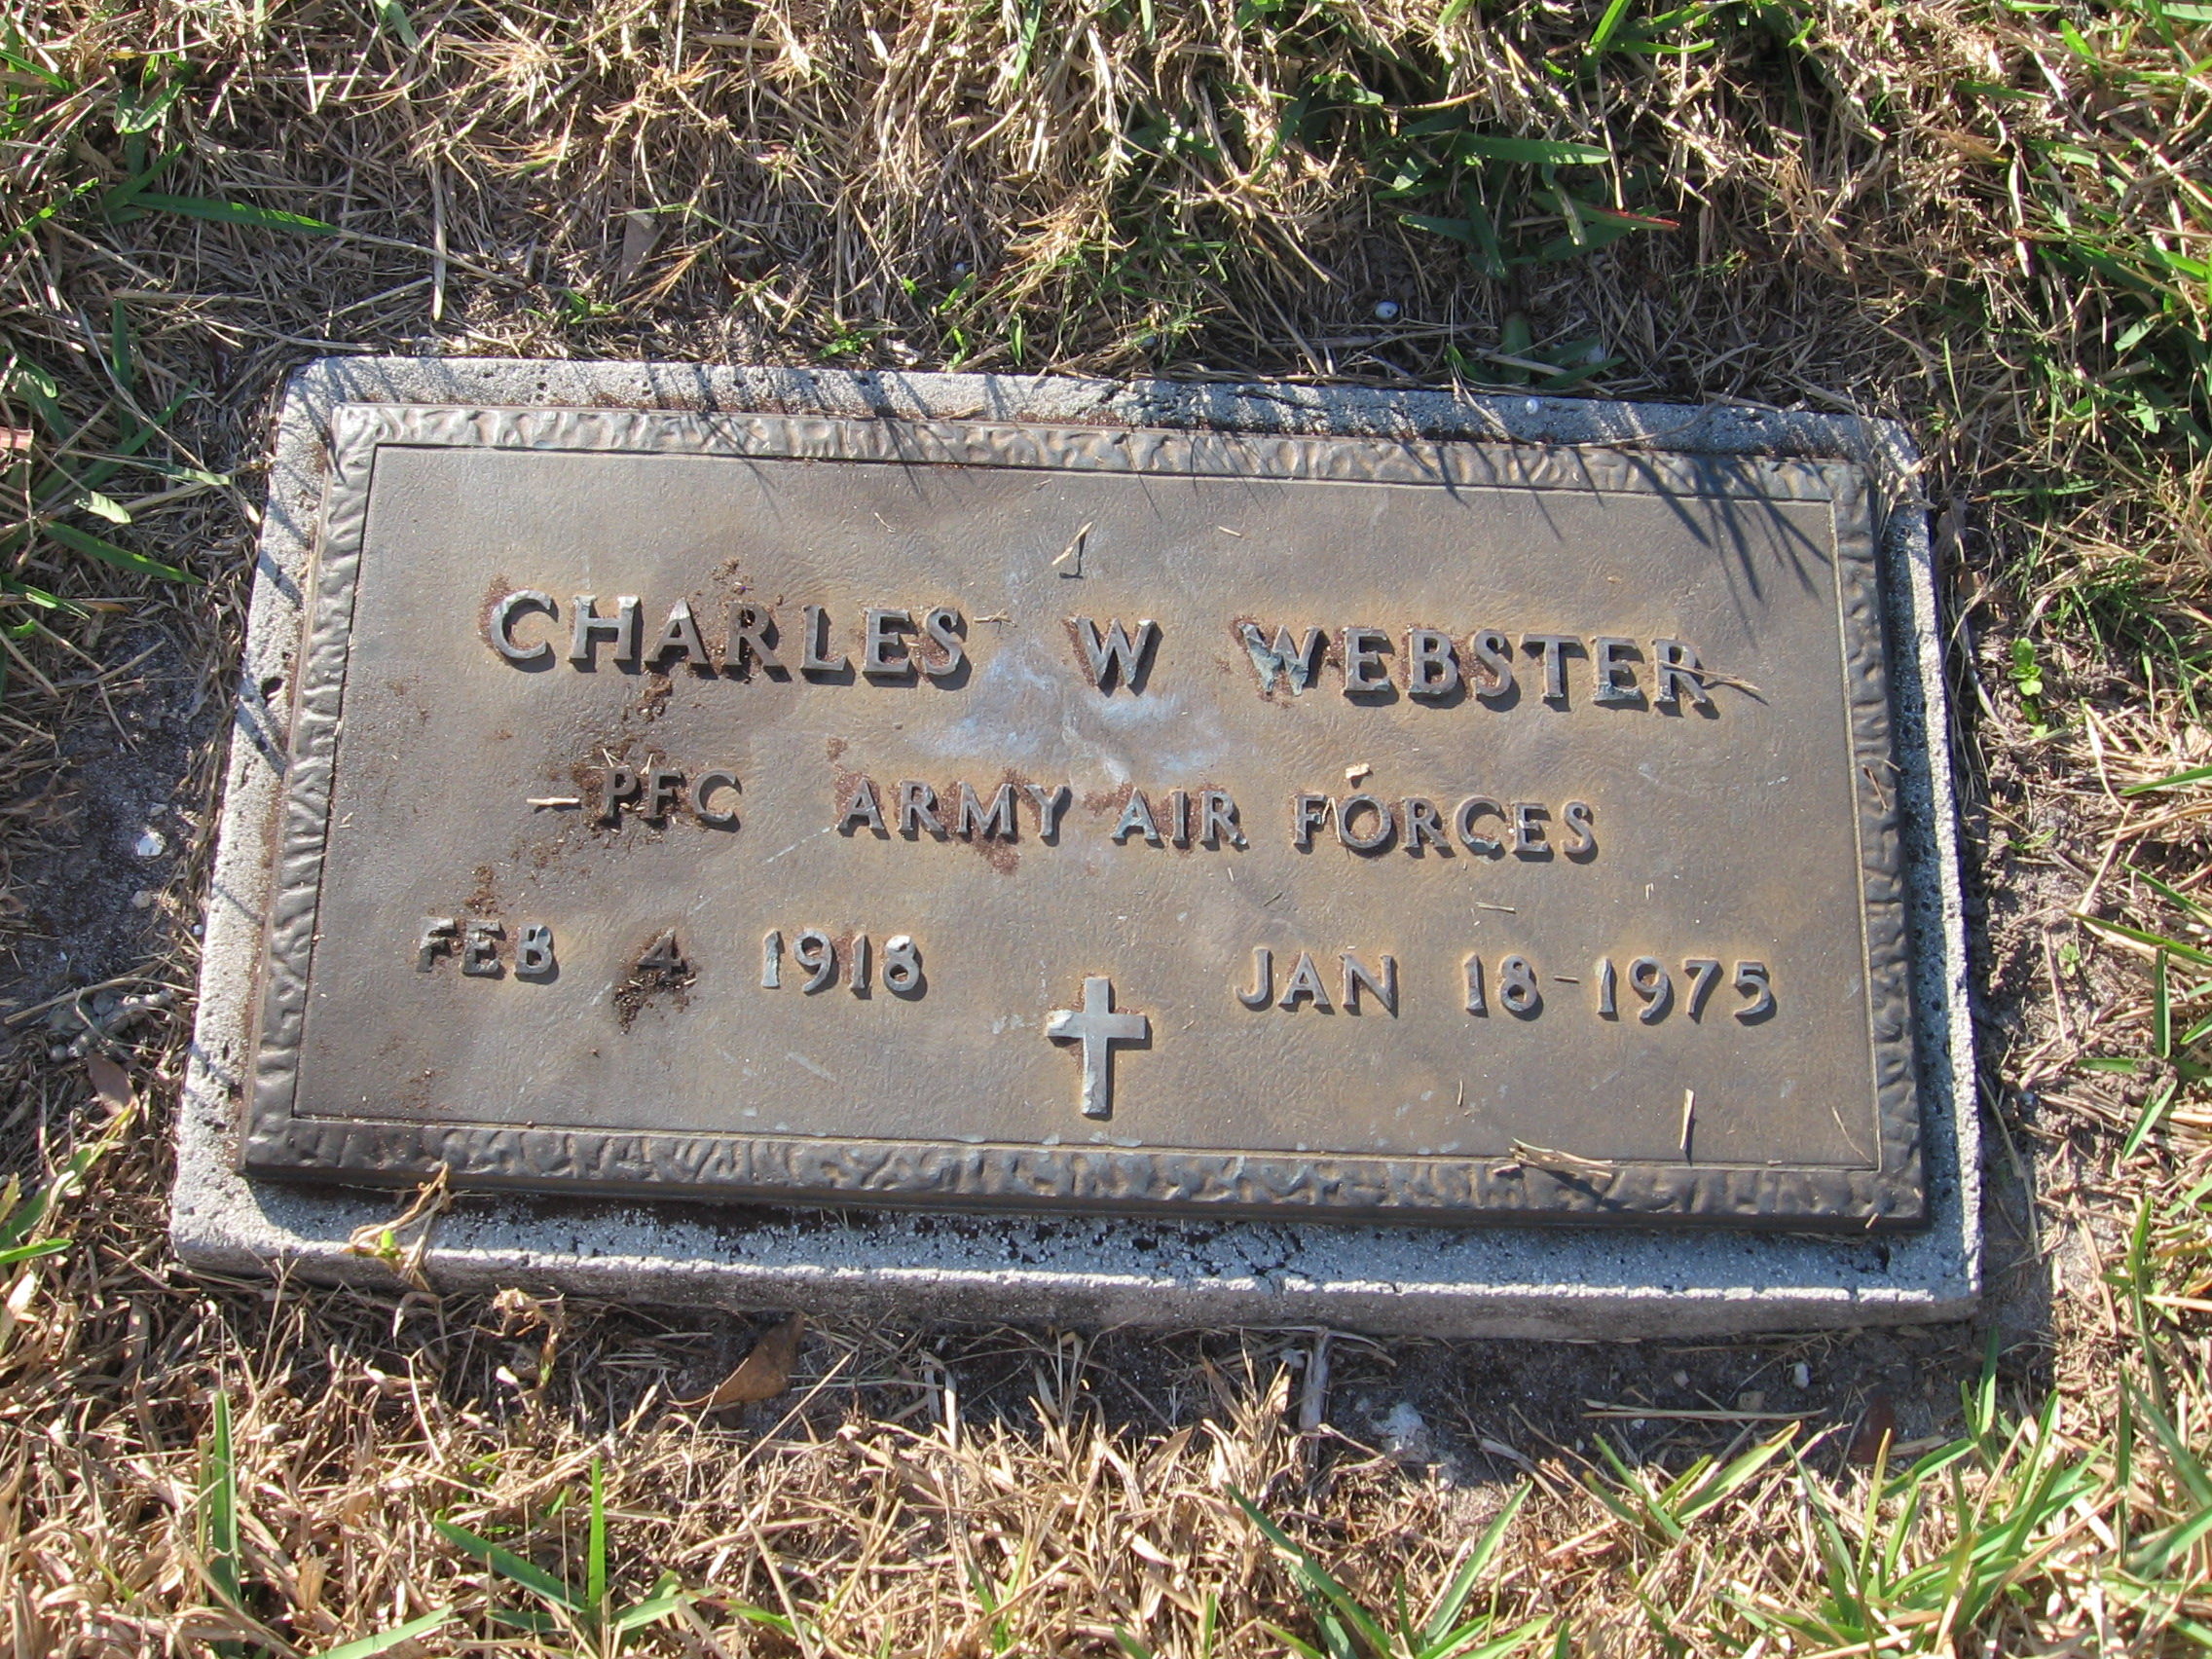 PFC Charles W Webster